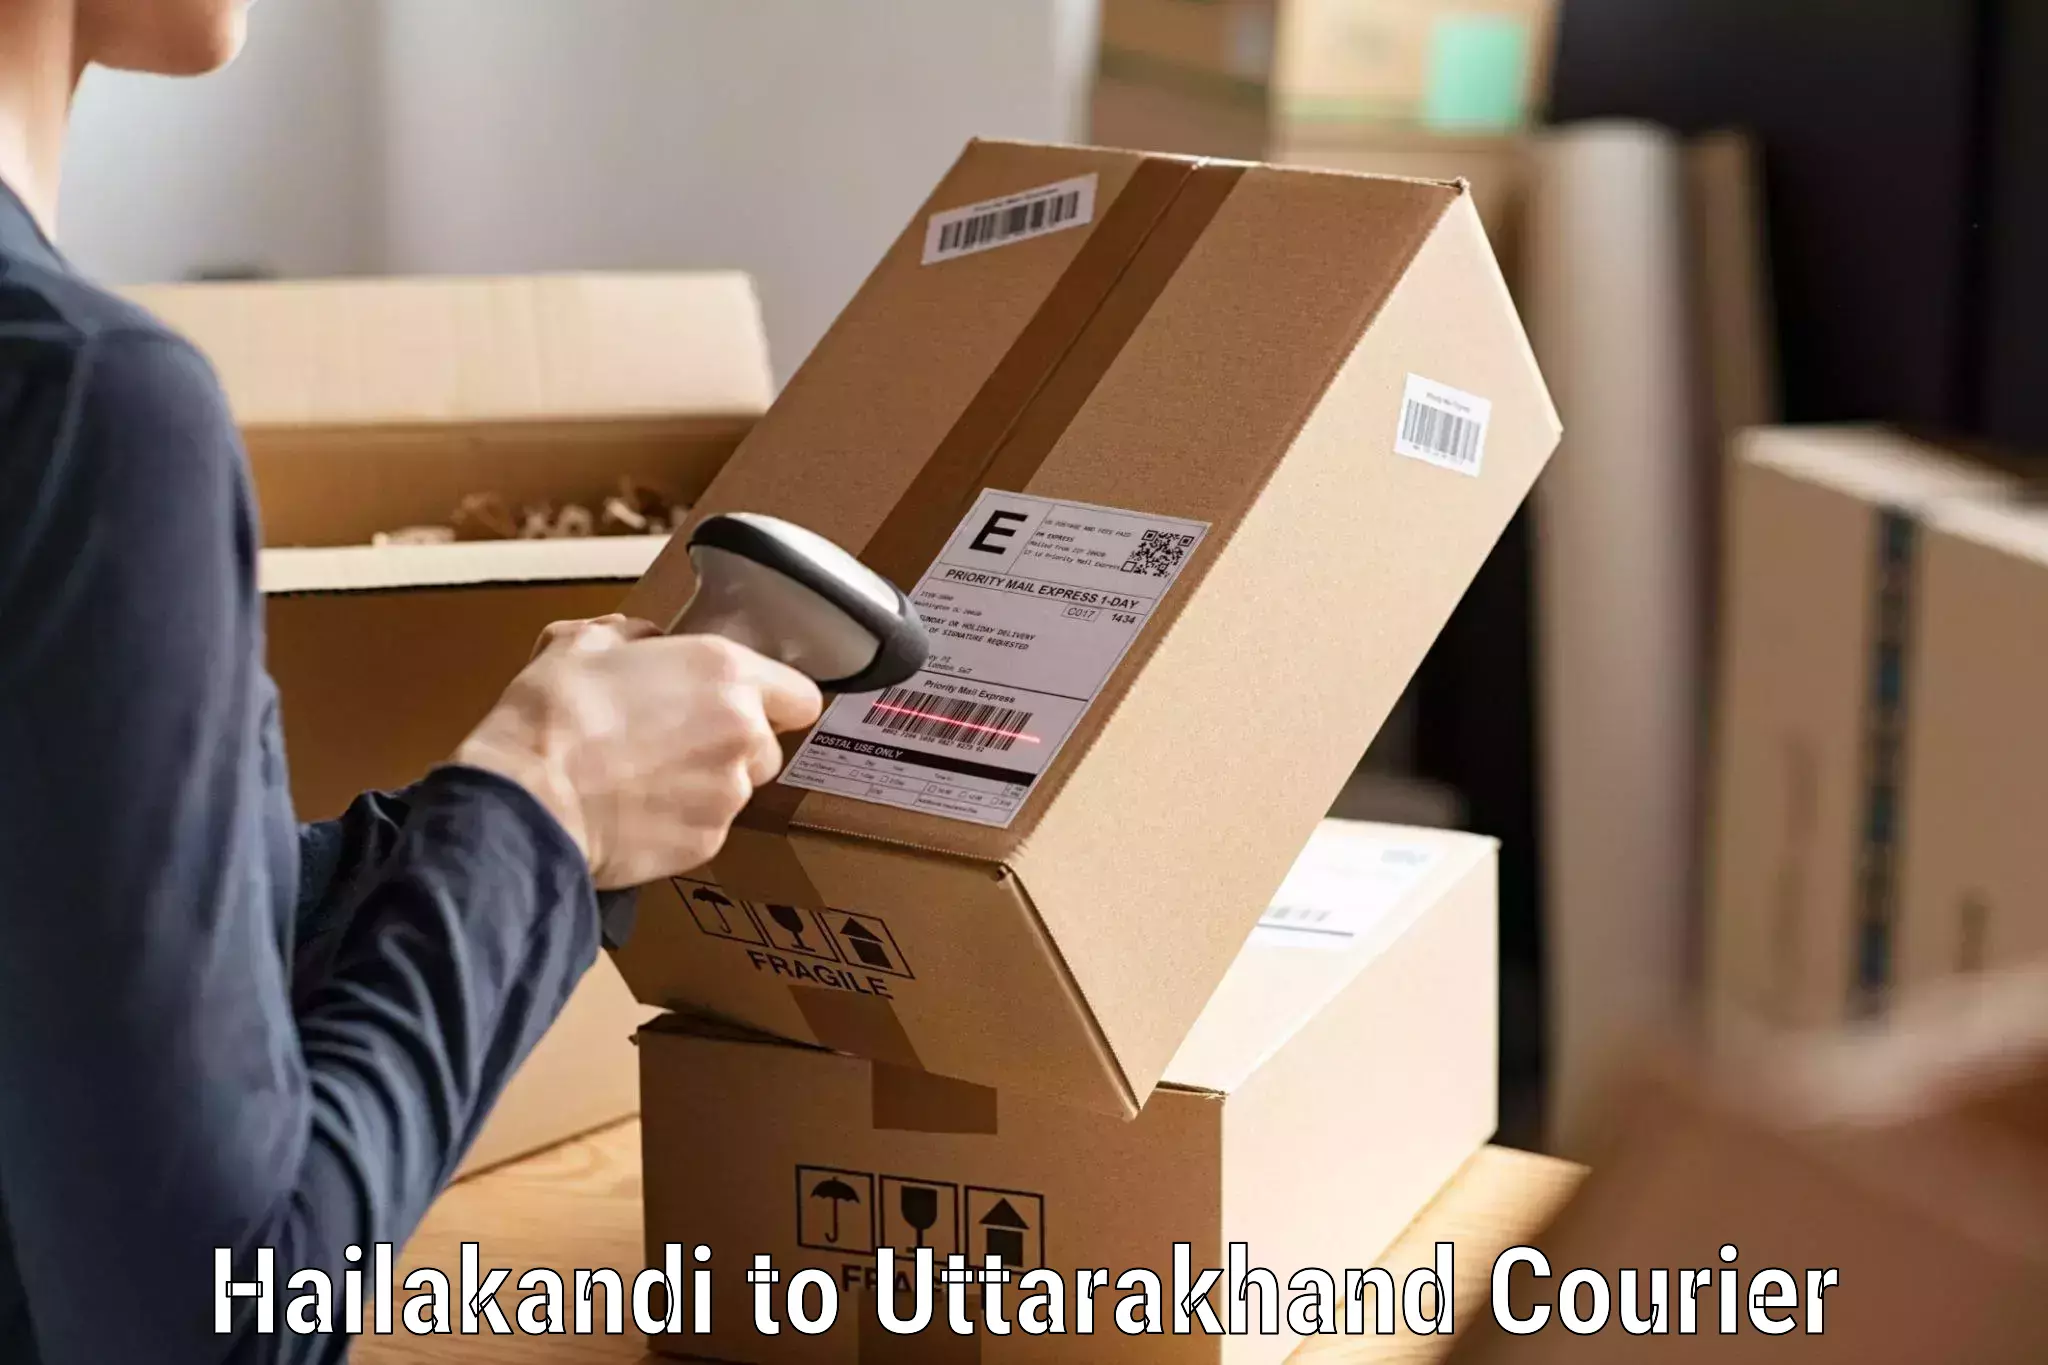 Express delivery capabilities Hailakandi to Dwarahat